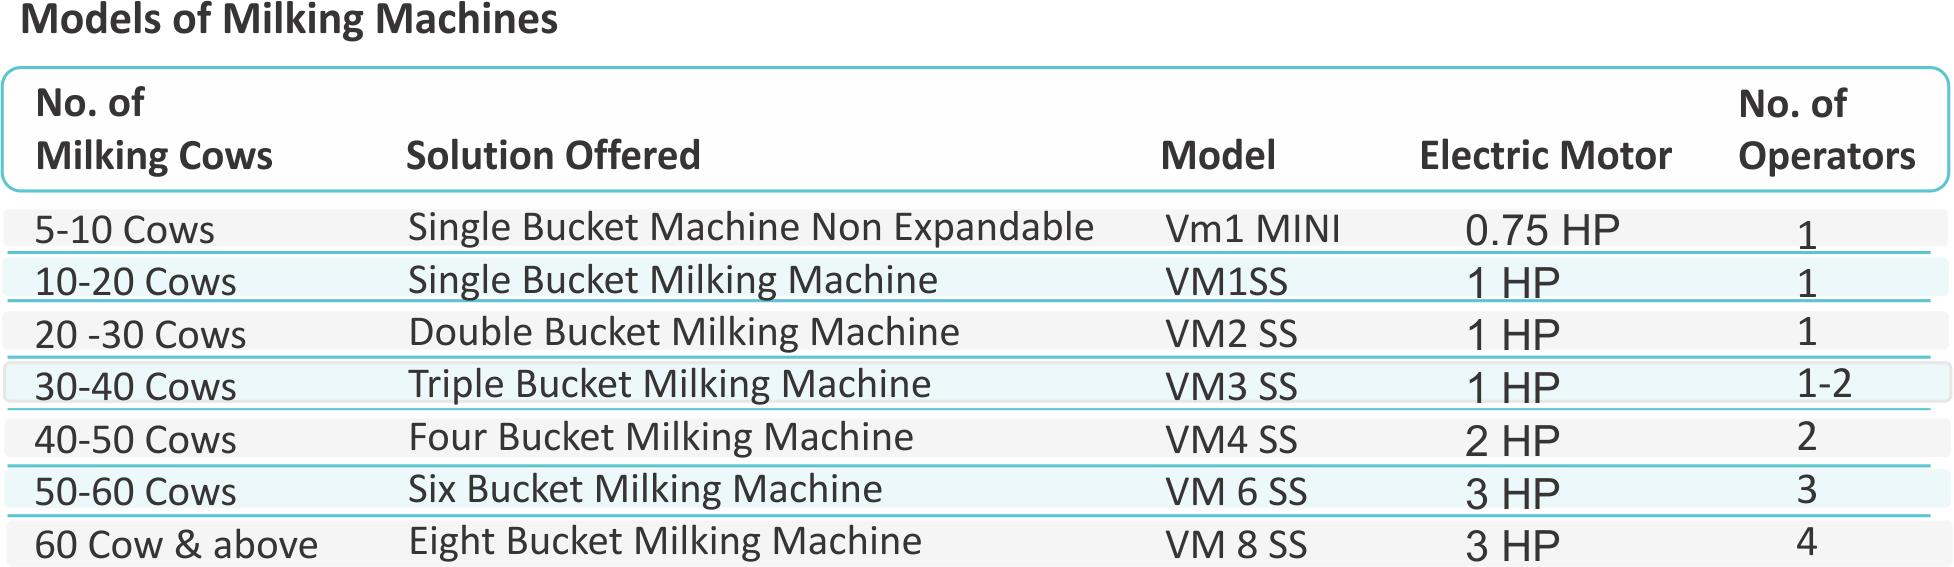 Vansun Models of Milking Machines